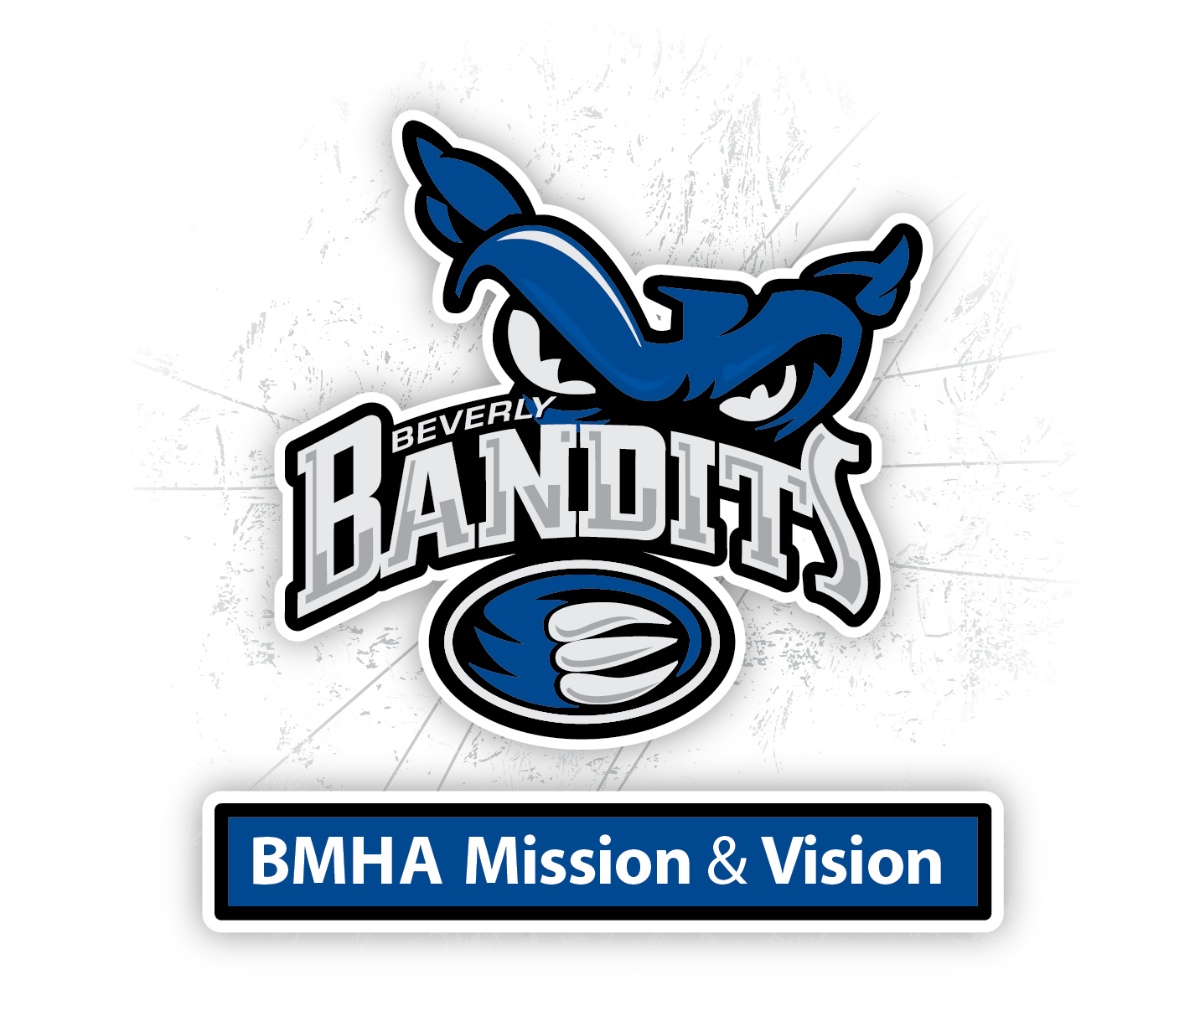 BMHA_Mission_Vision.jpg